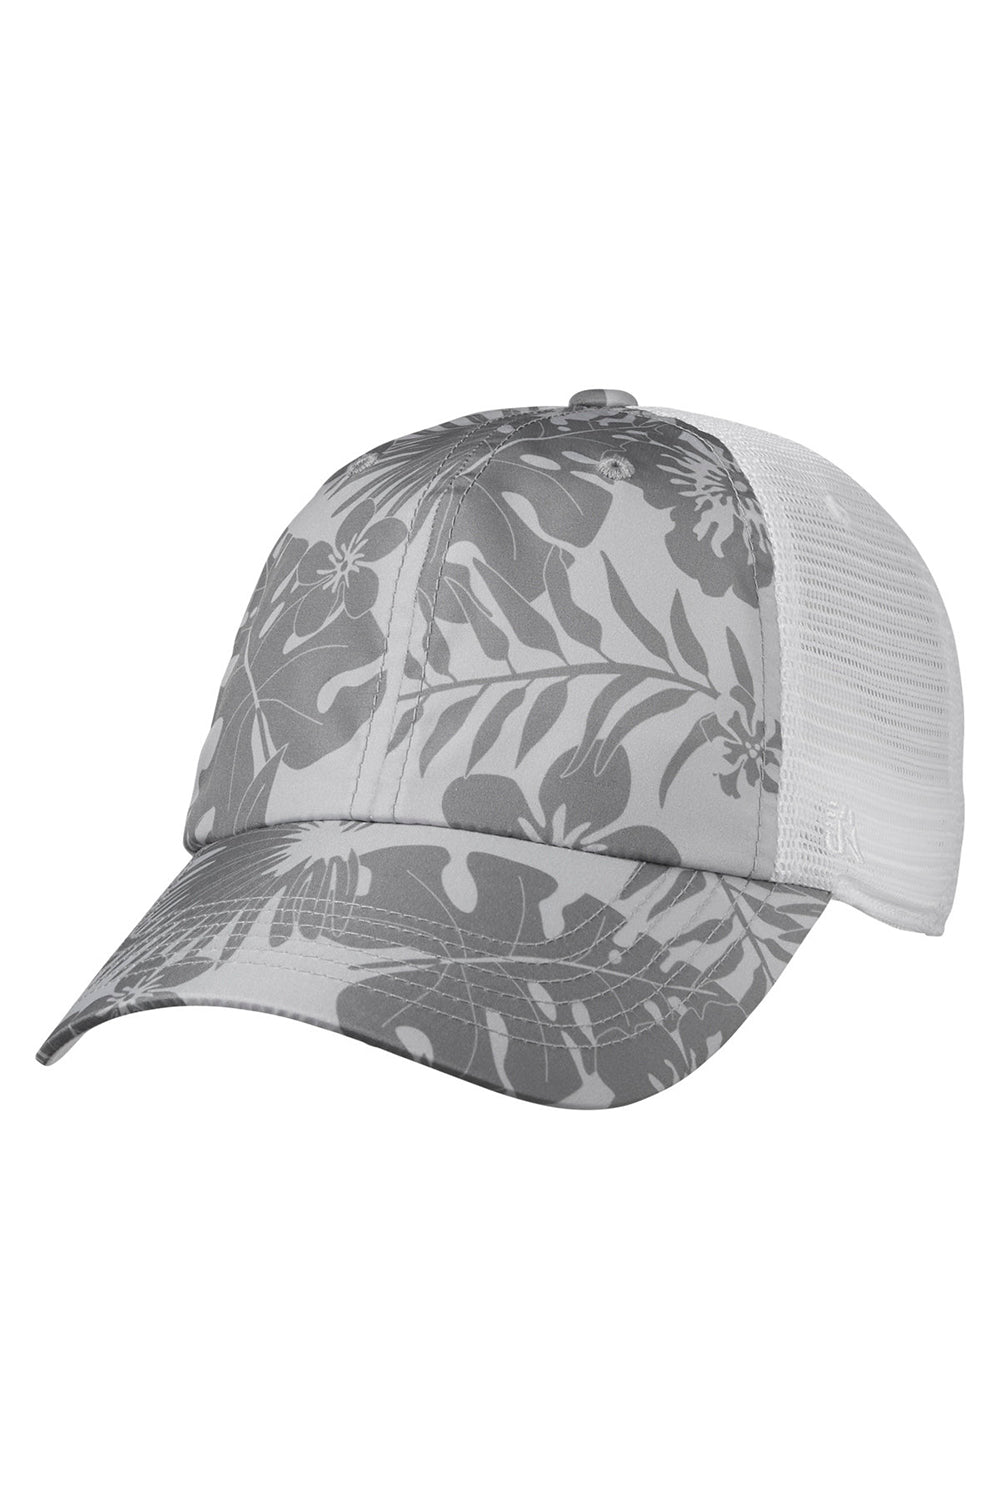 J America TW5506 Mens Offroad Hat Grey Aloha Front